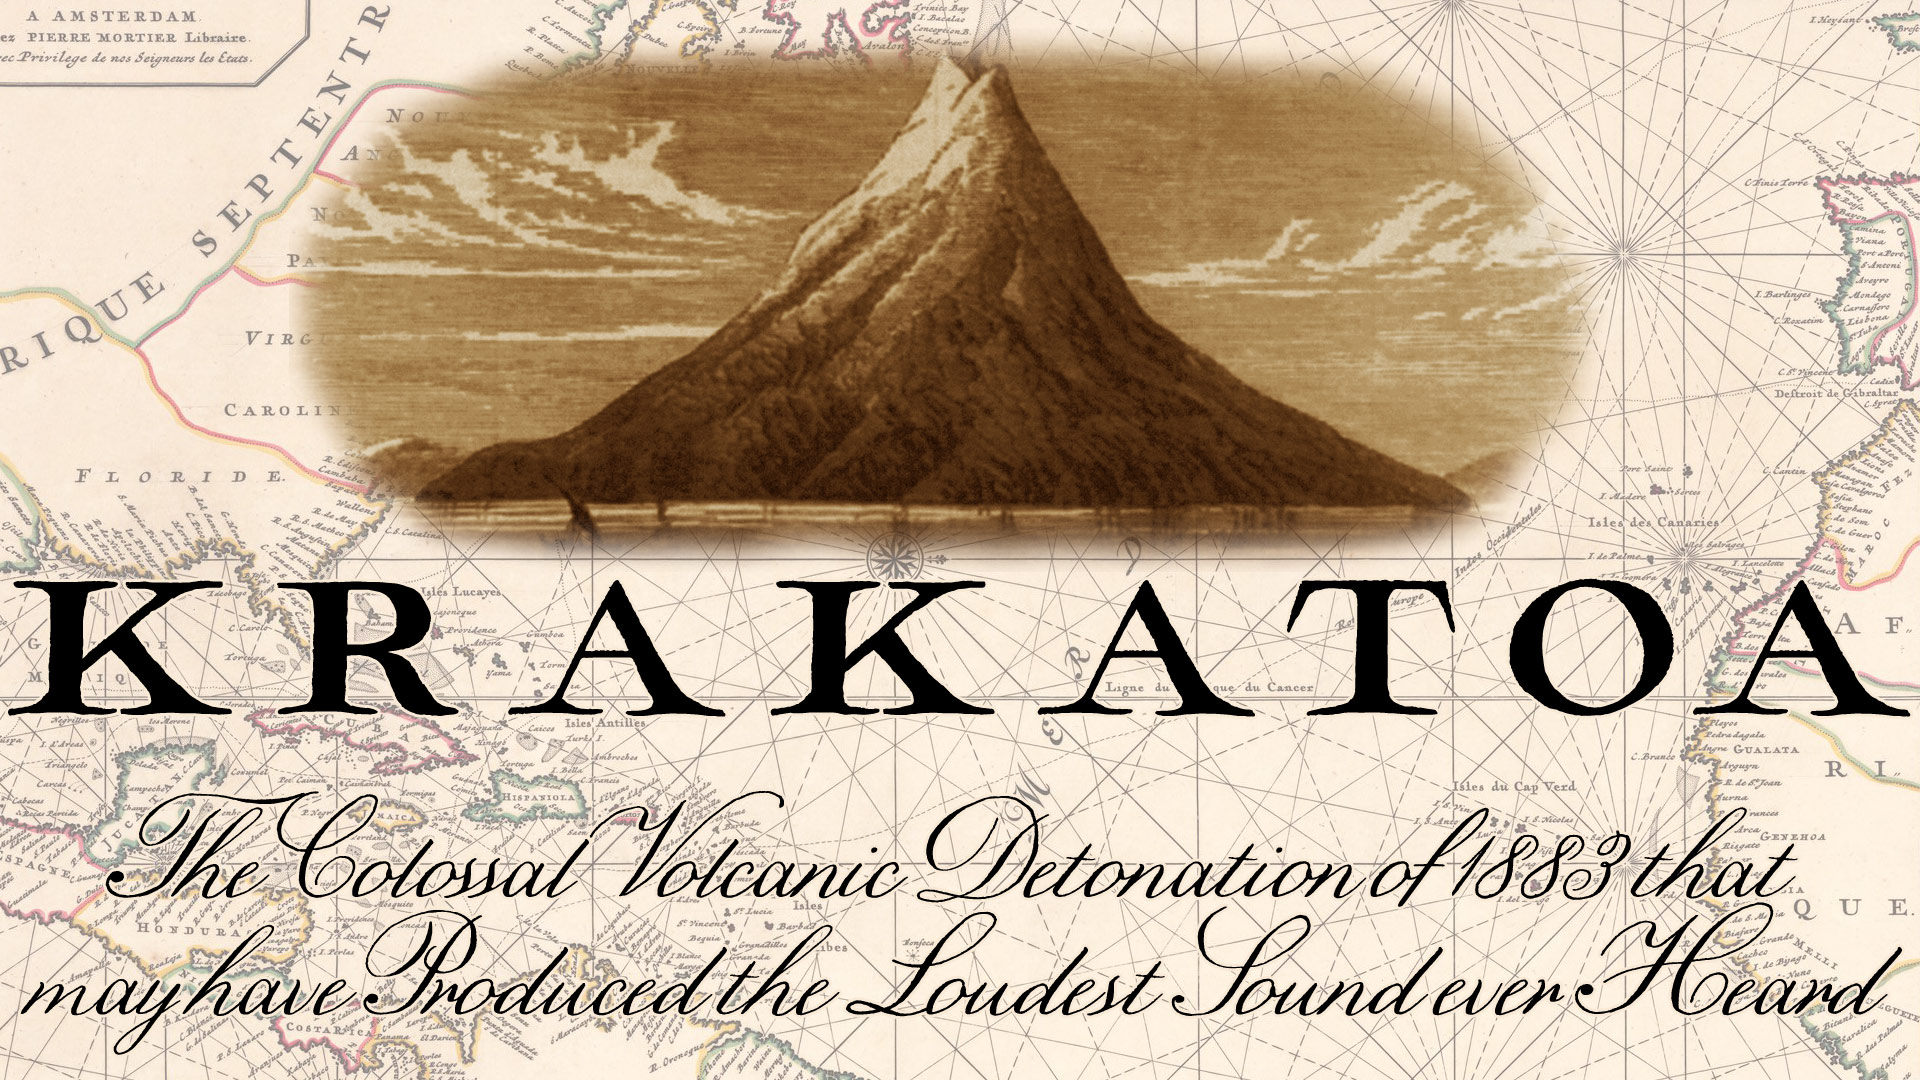 The Krakatoa Volcanic Eruption of 1883 – The Loudest Sound Ever Heard?